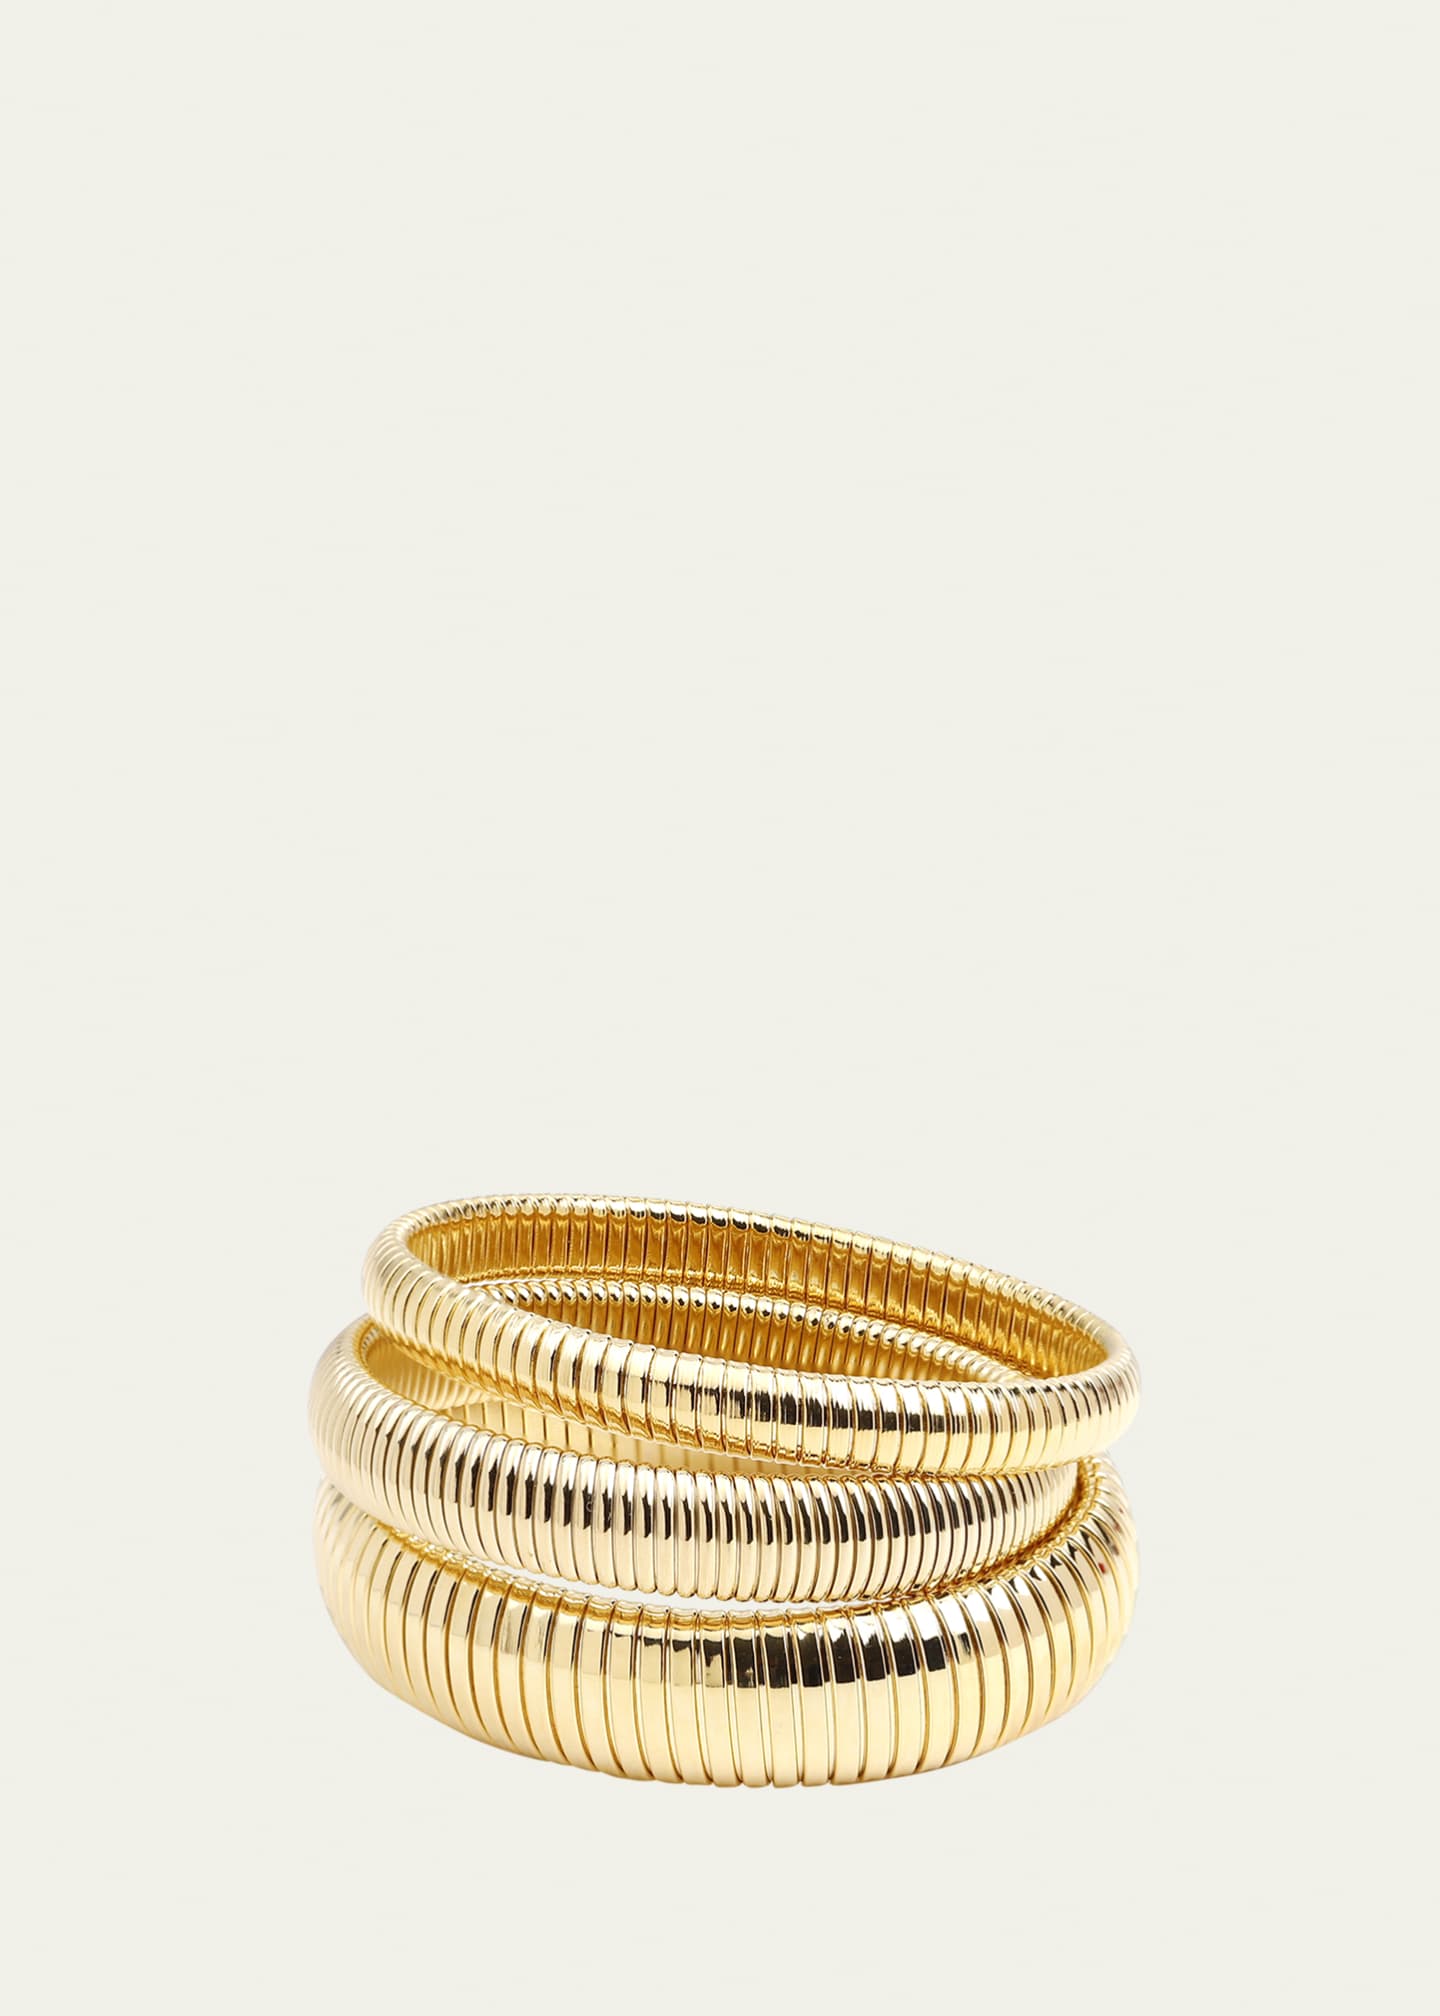 Ben-Amun Cobra Elastic Bracelets, Set of 3, Gold